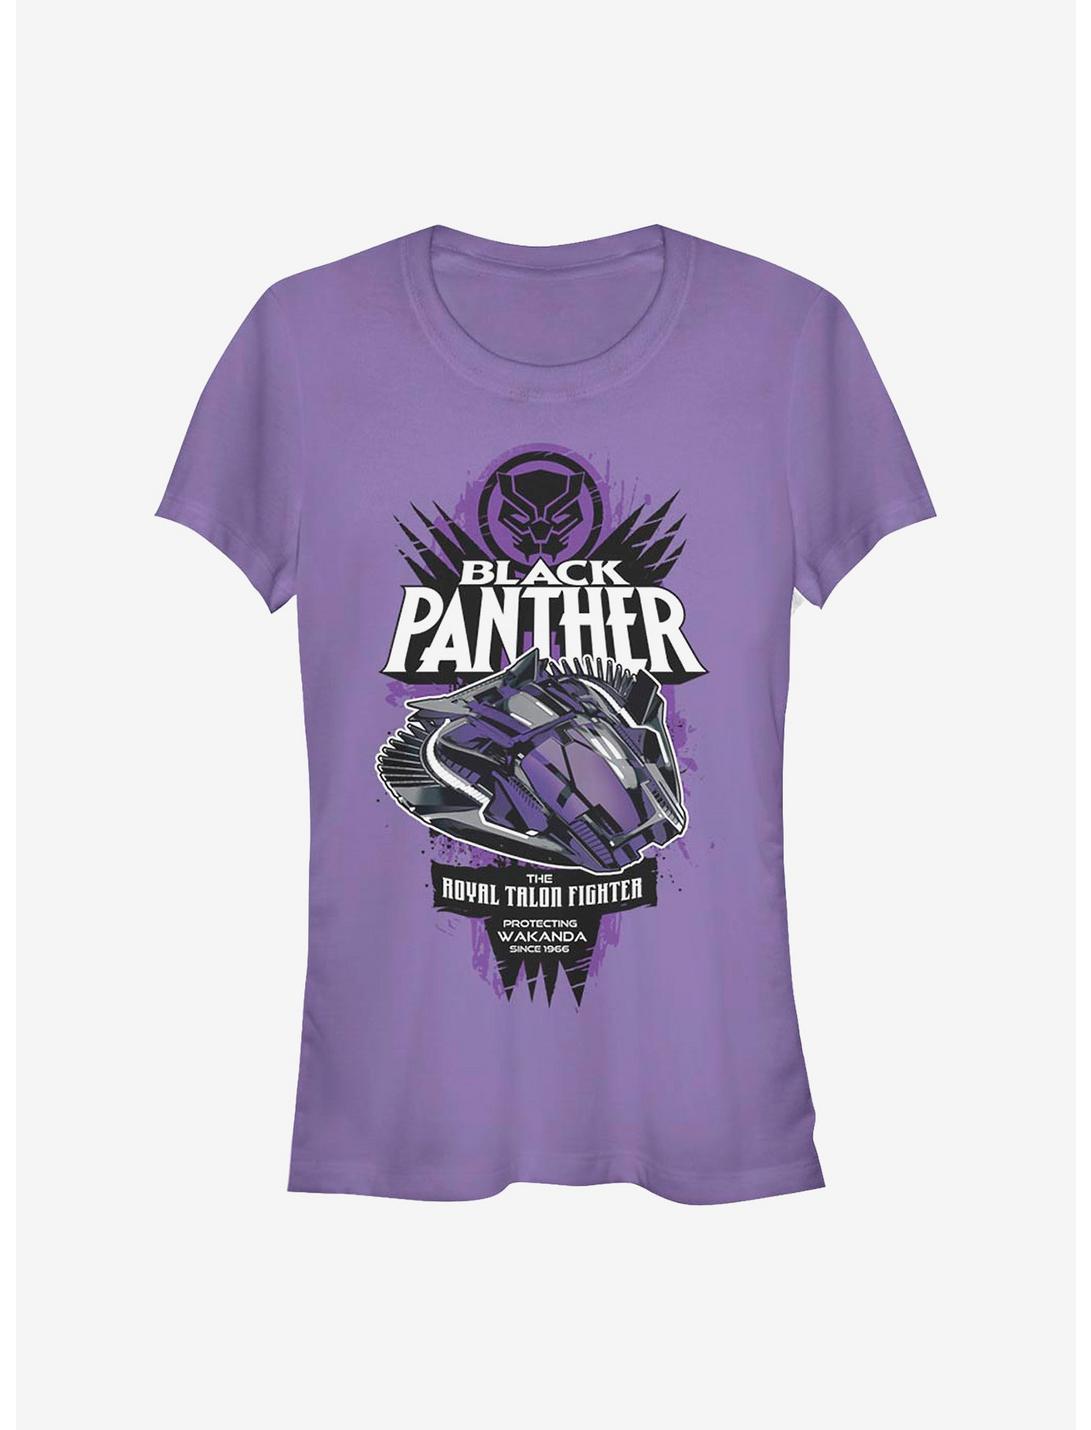 Marvel Black Panther The Royal Talon Fighter Girls T-Shirt, PURPLE, hi-res